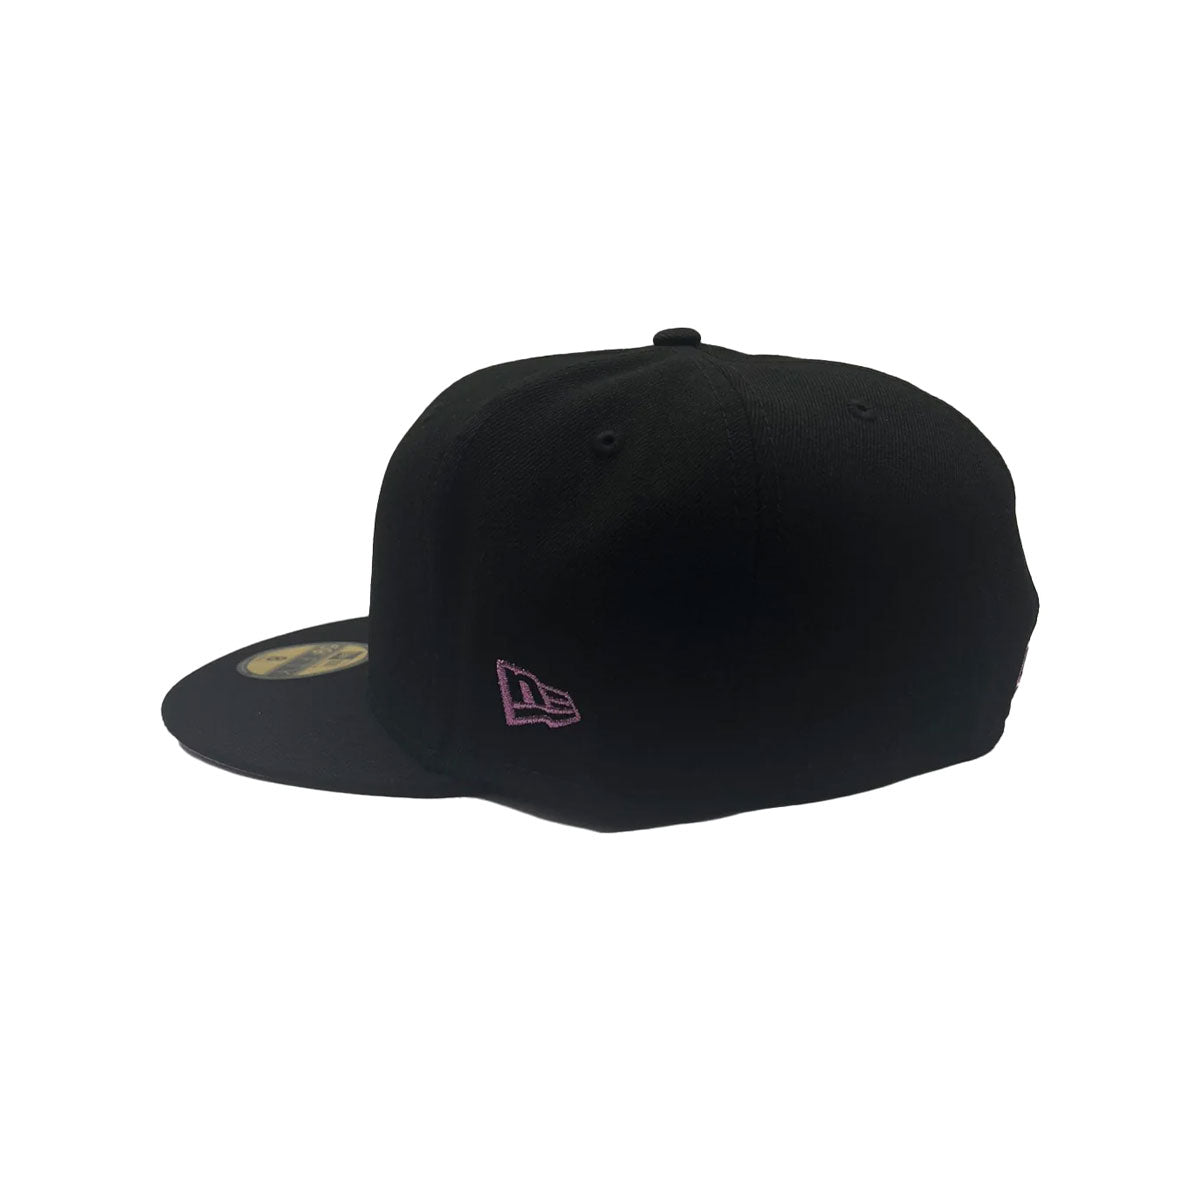 New Era Mens MLB New York Yankees Metallic Pop 59Fifty Fitted Hat